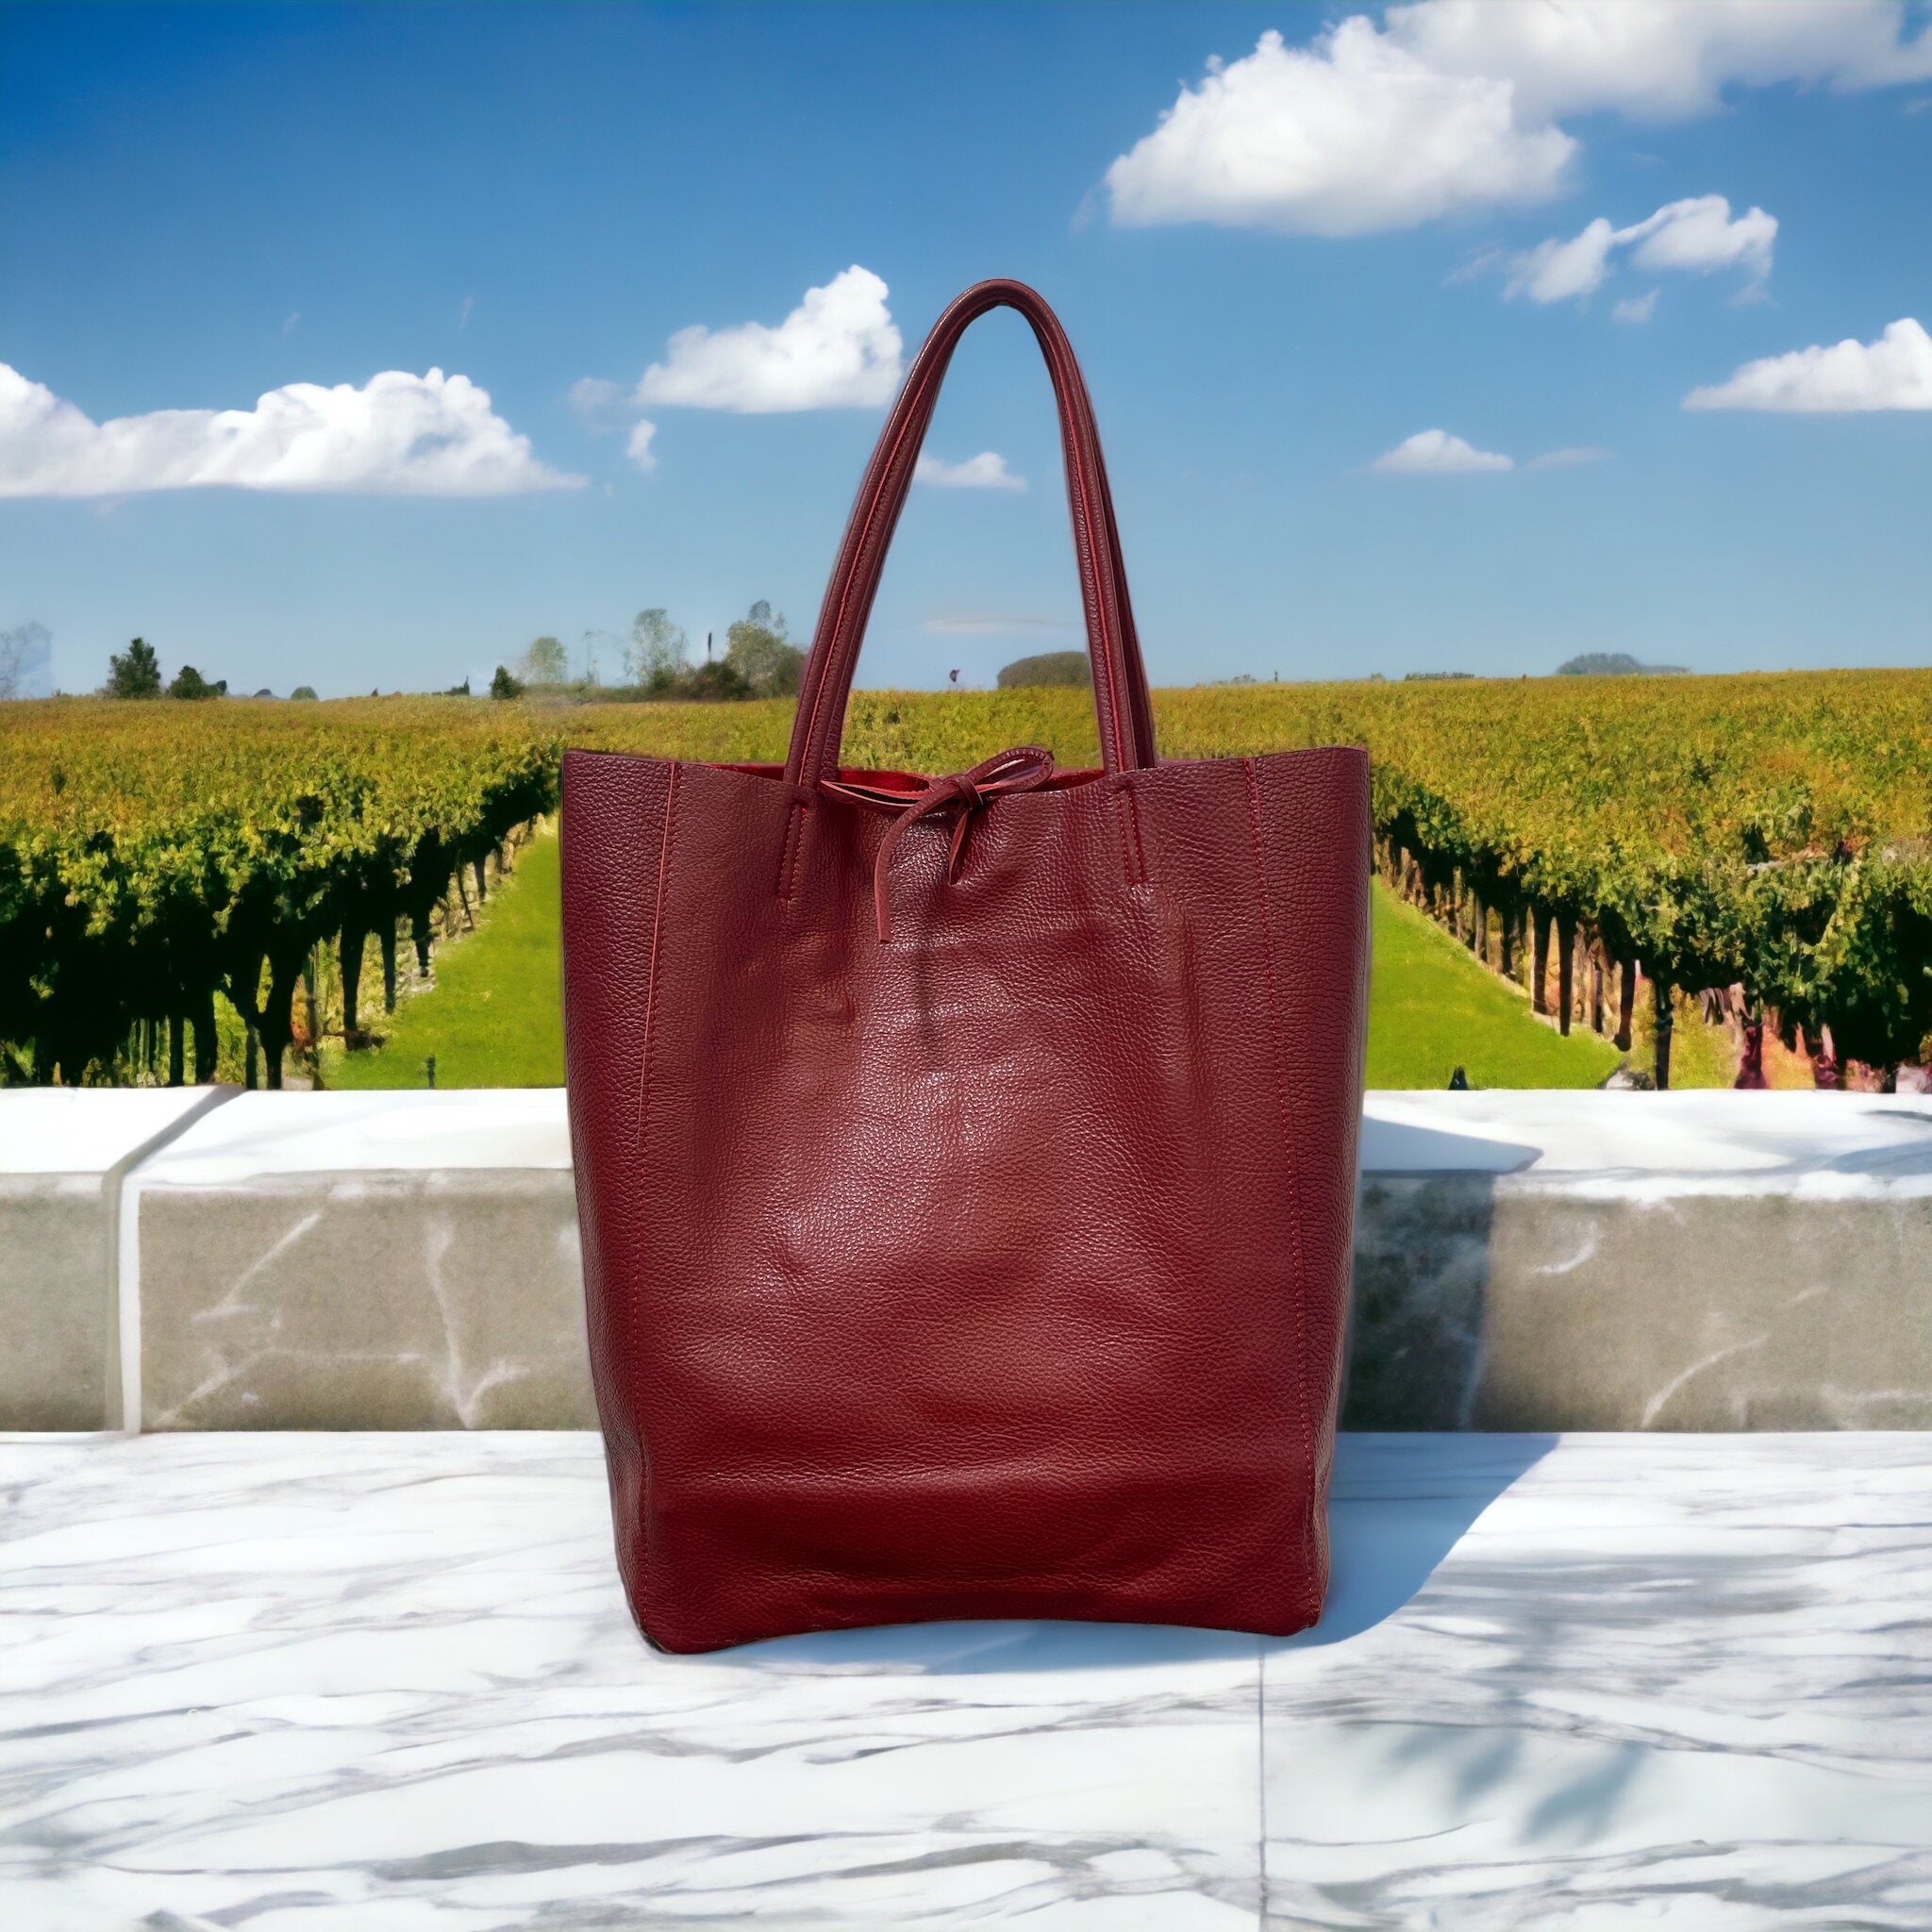 Pierre Cardin Burgundy Leather Medium Structured Shoulder Bag for womens:  Handbags: Amazon.com